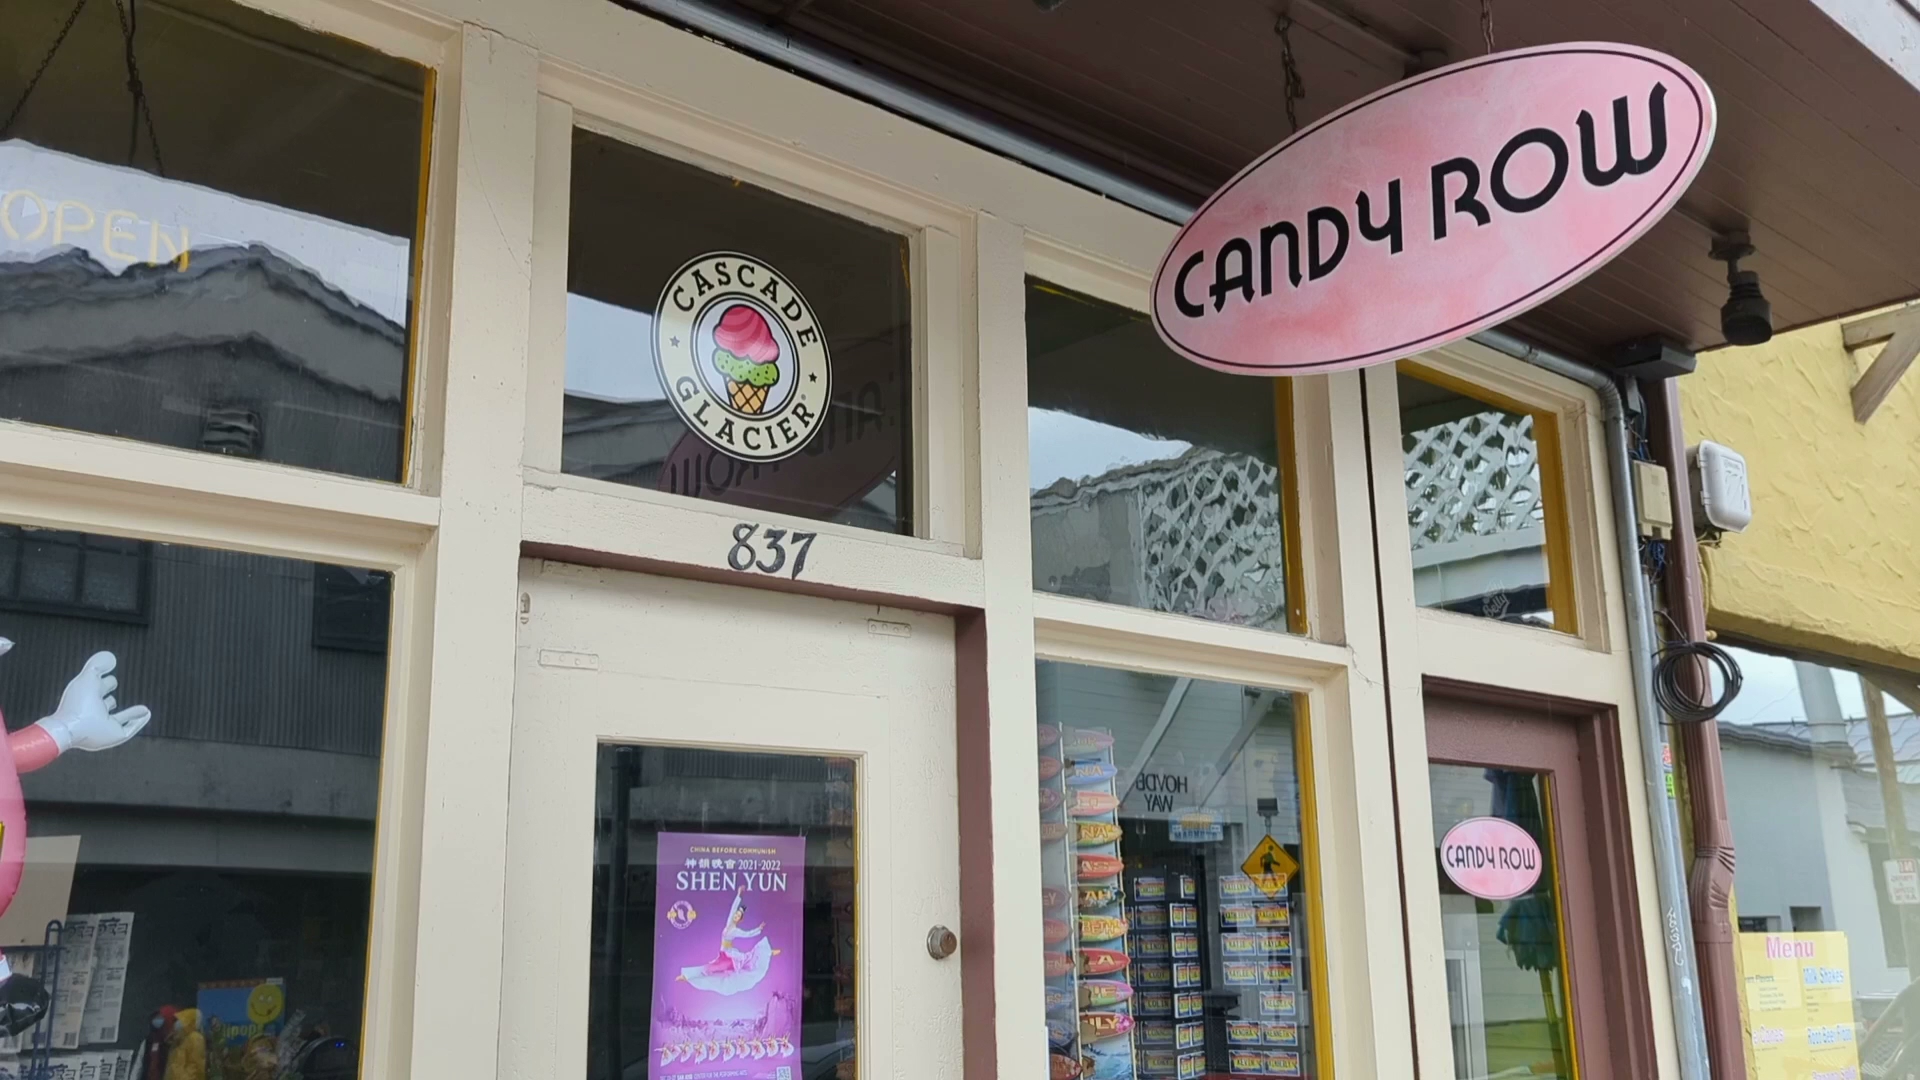 Candy Row